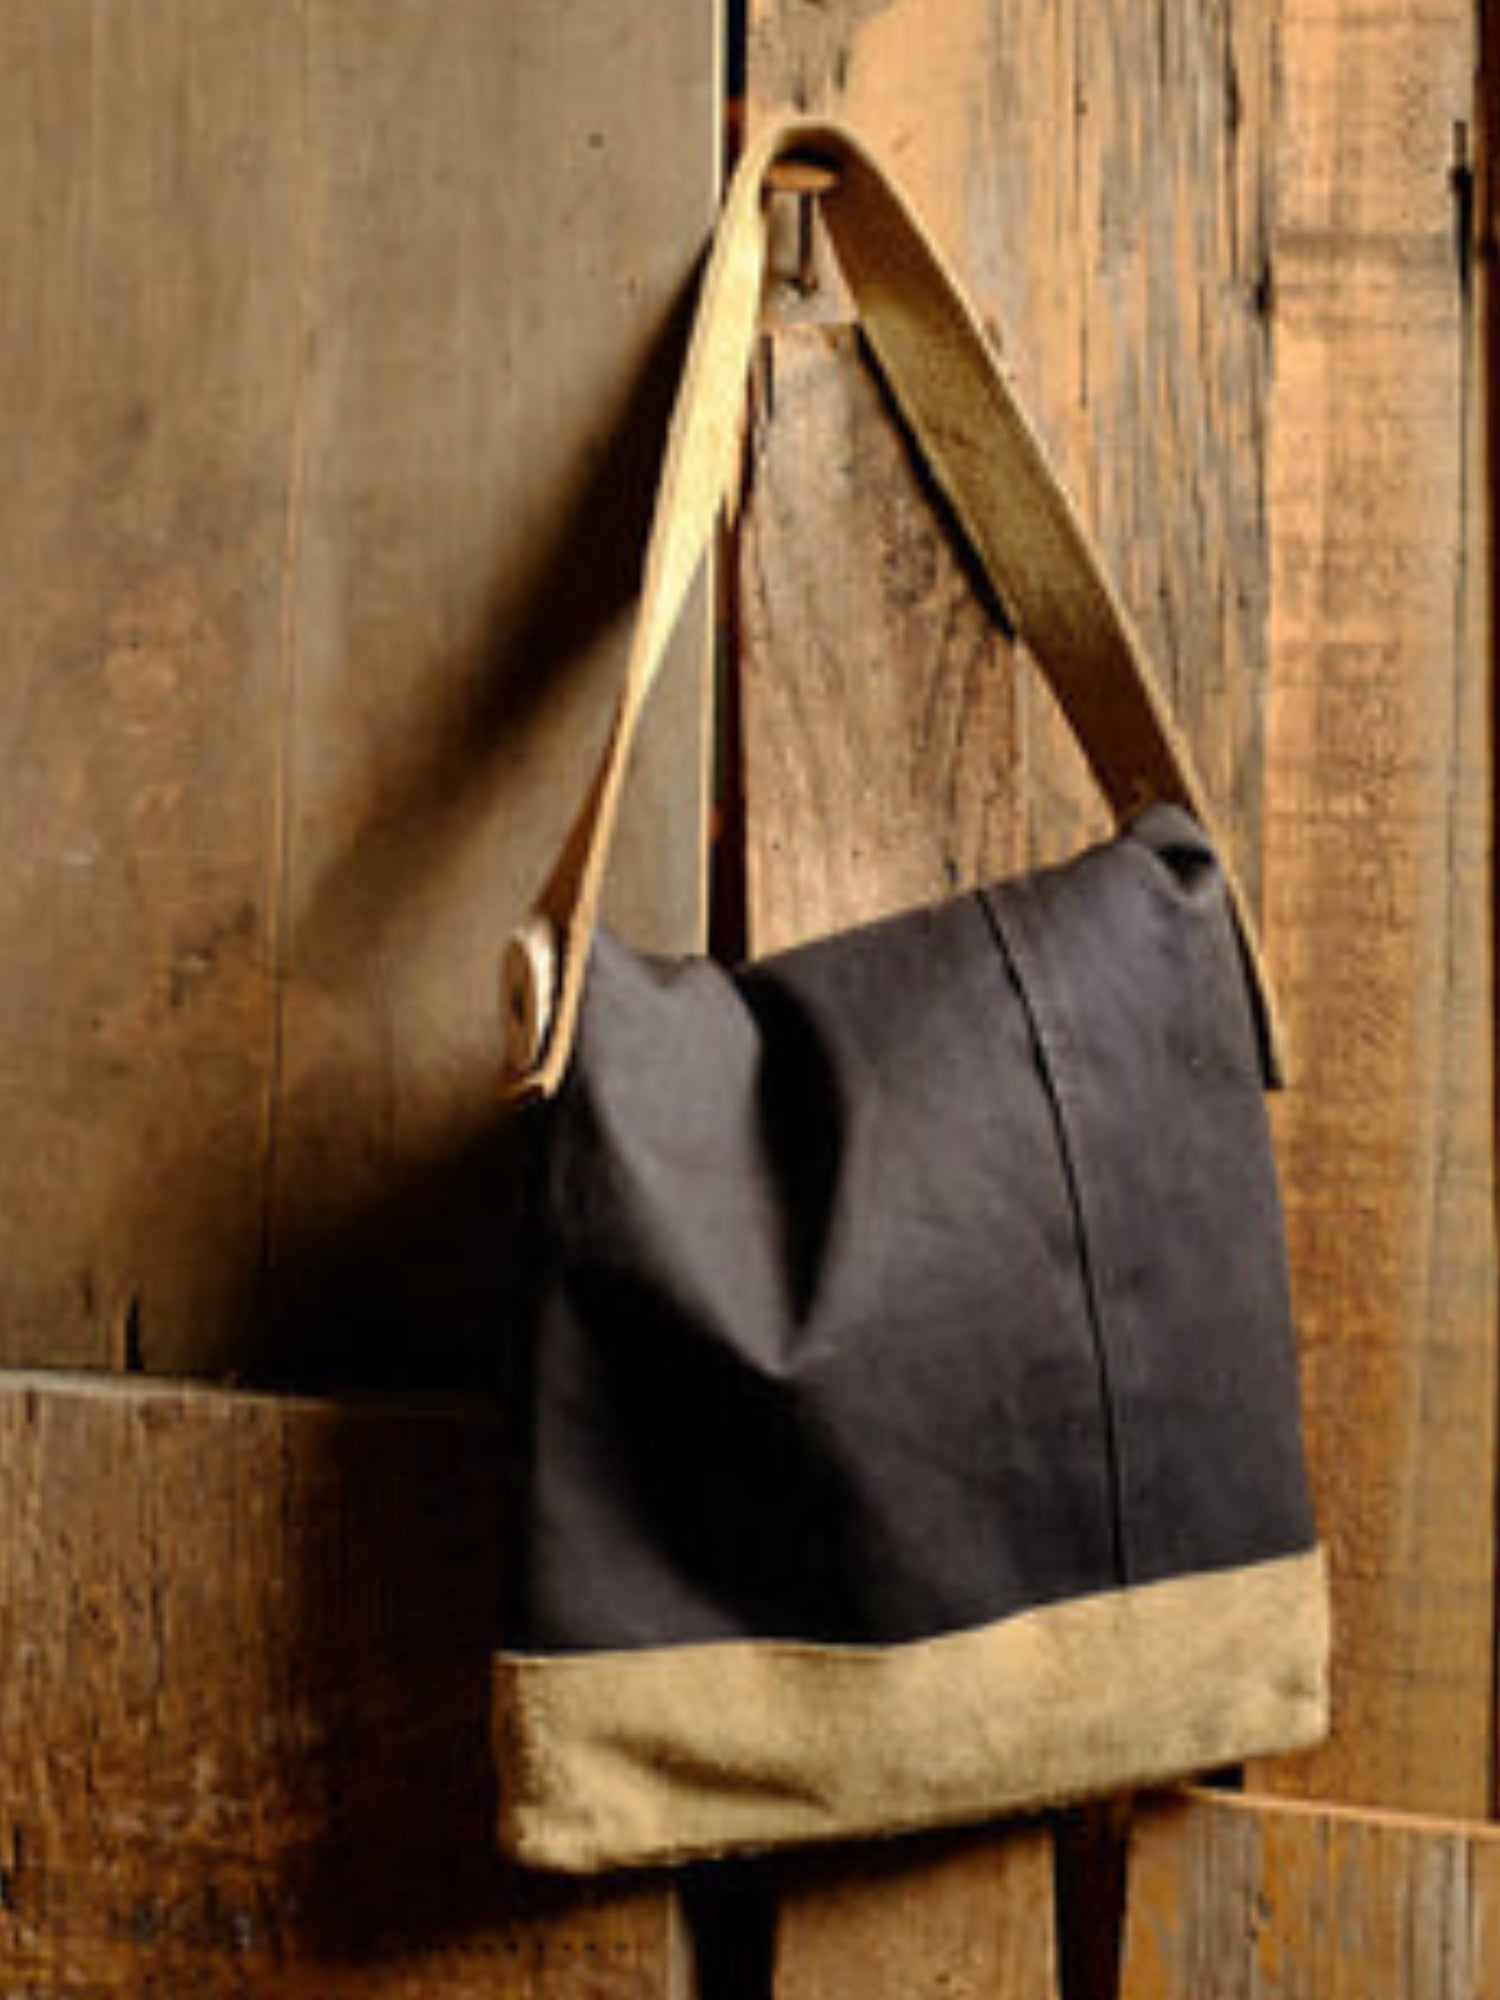 Betty Jane's black utility bag